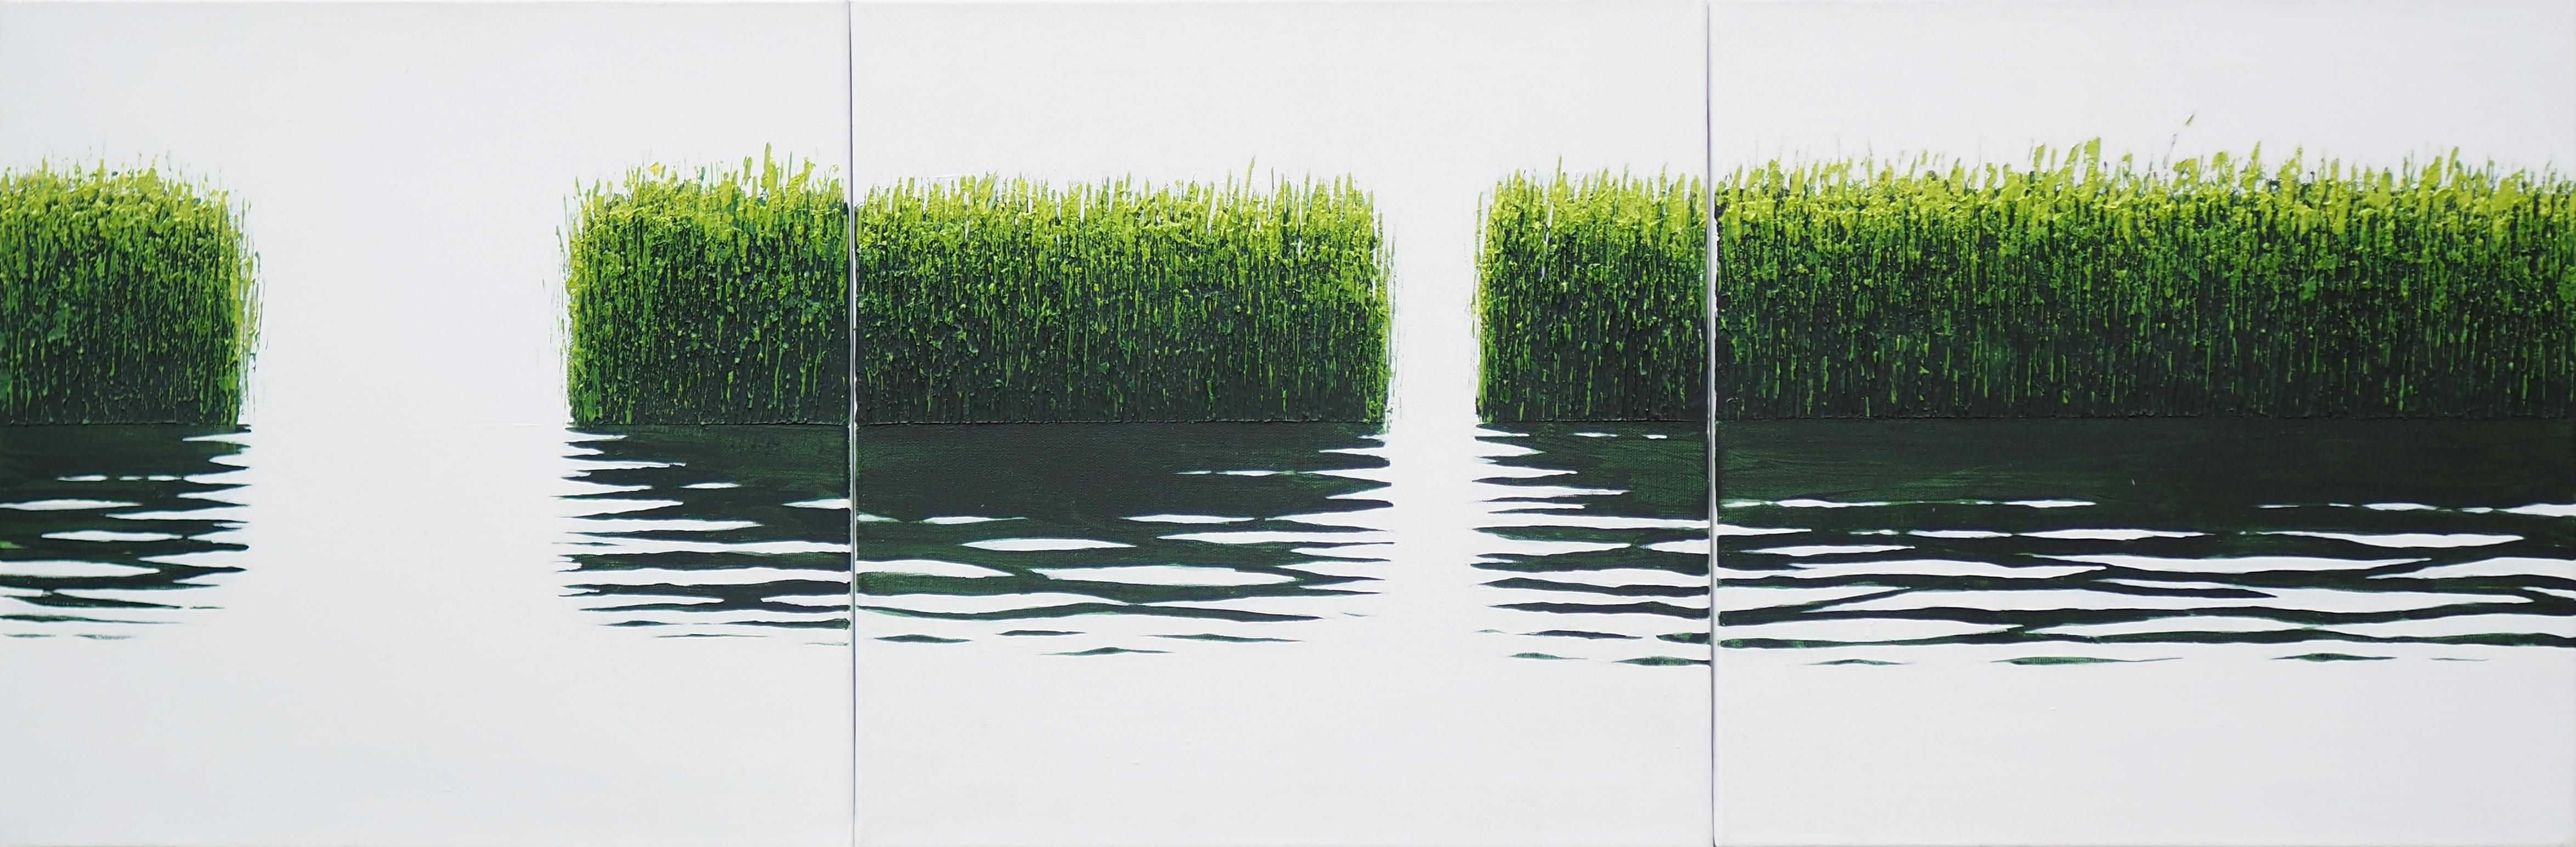 Grzegorz Wójcik Figurative Painting - GRASSES V Triptych - Atmospheric Landscape, Modern Seascape Painting 